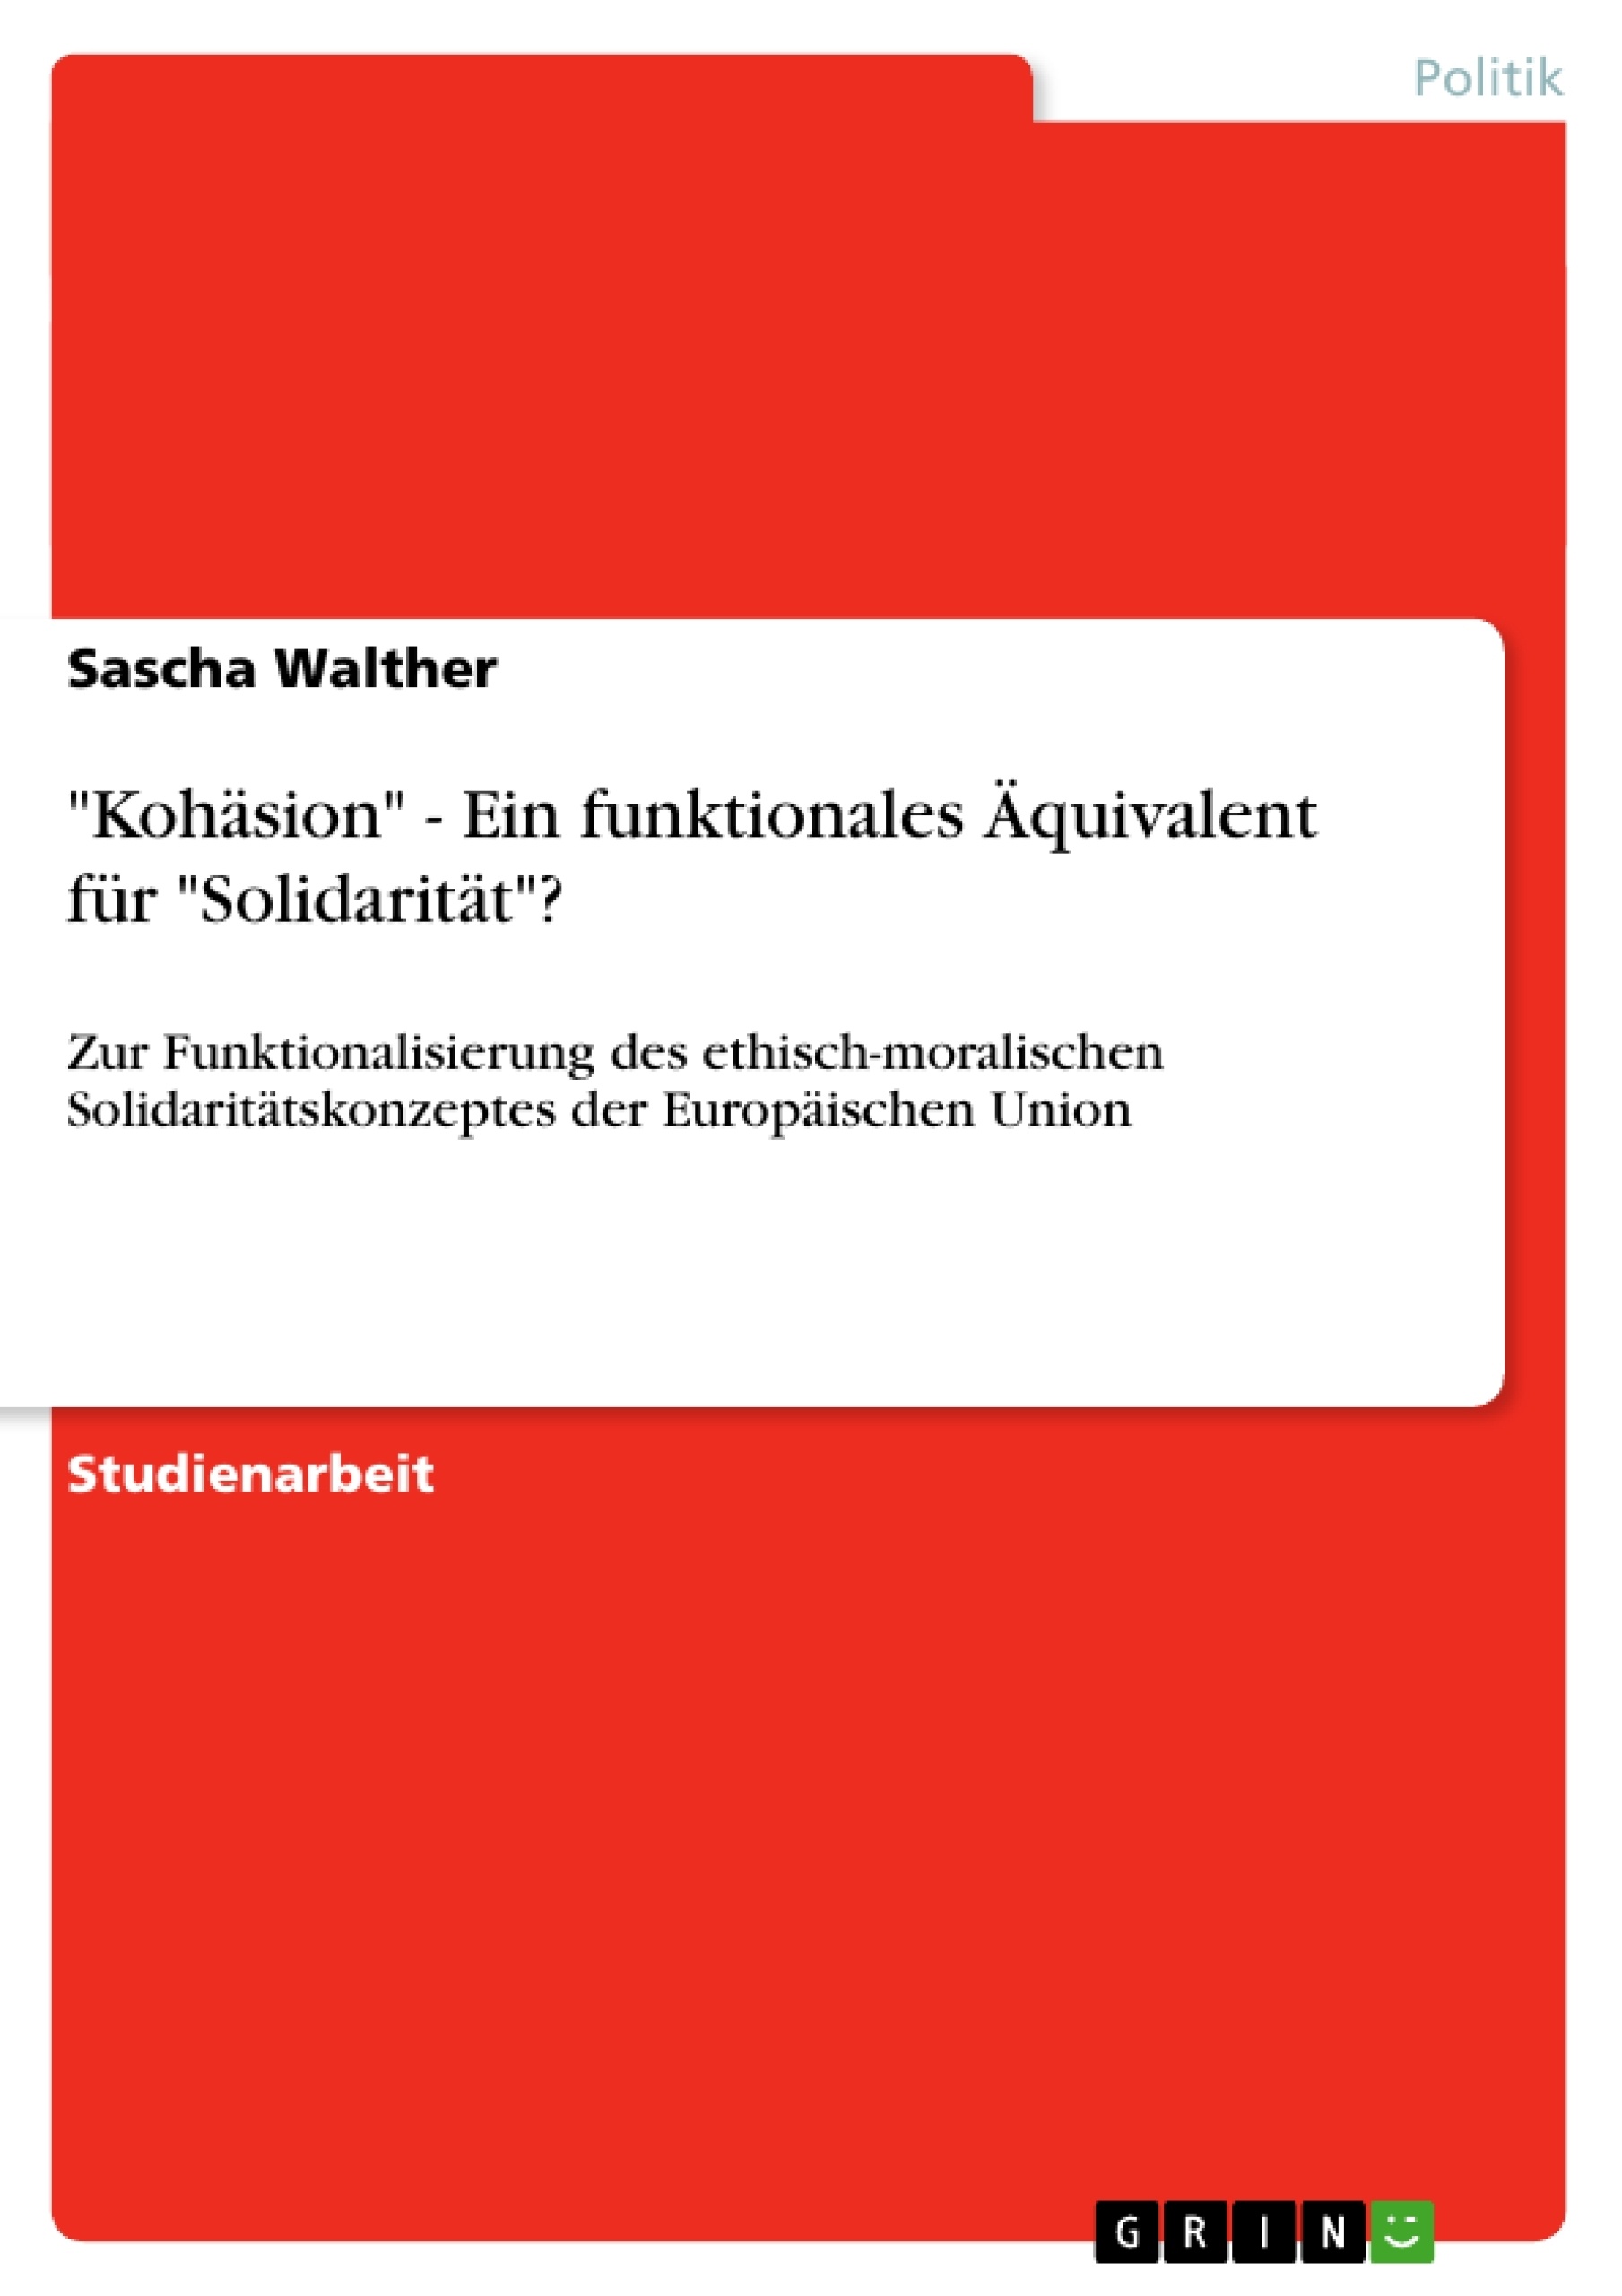 Titre: "Kohäsion" - Ein funktionales Äquivalent für "Solidarität"?